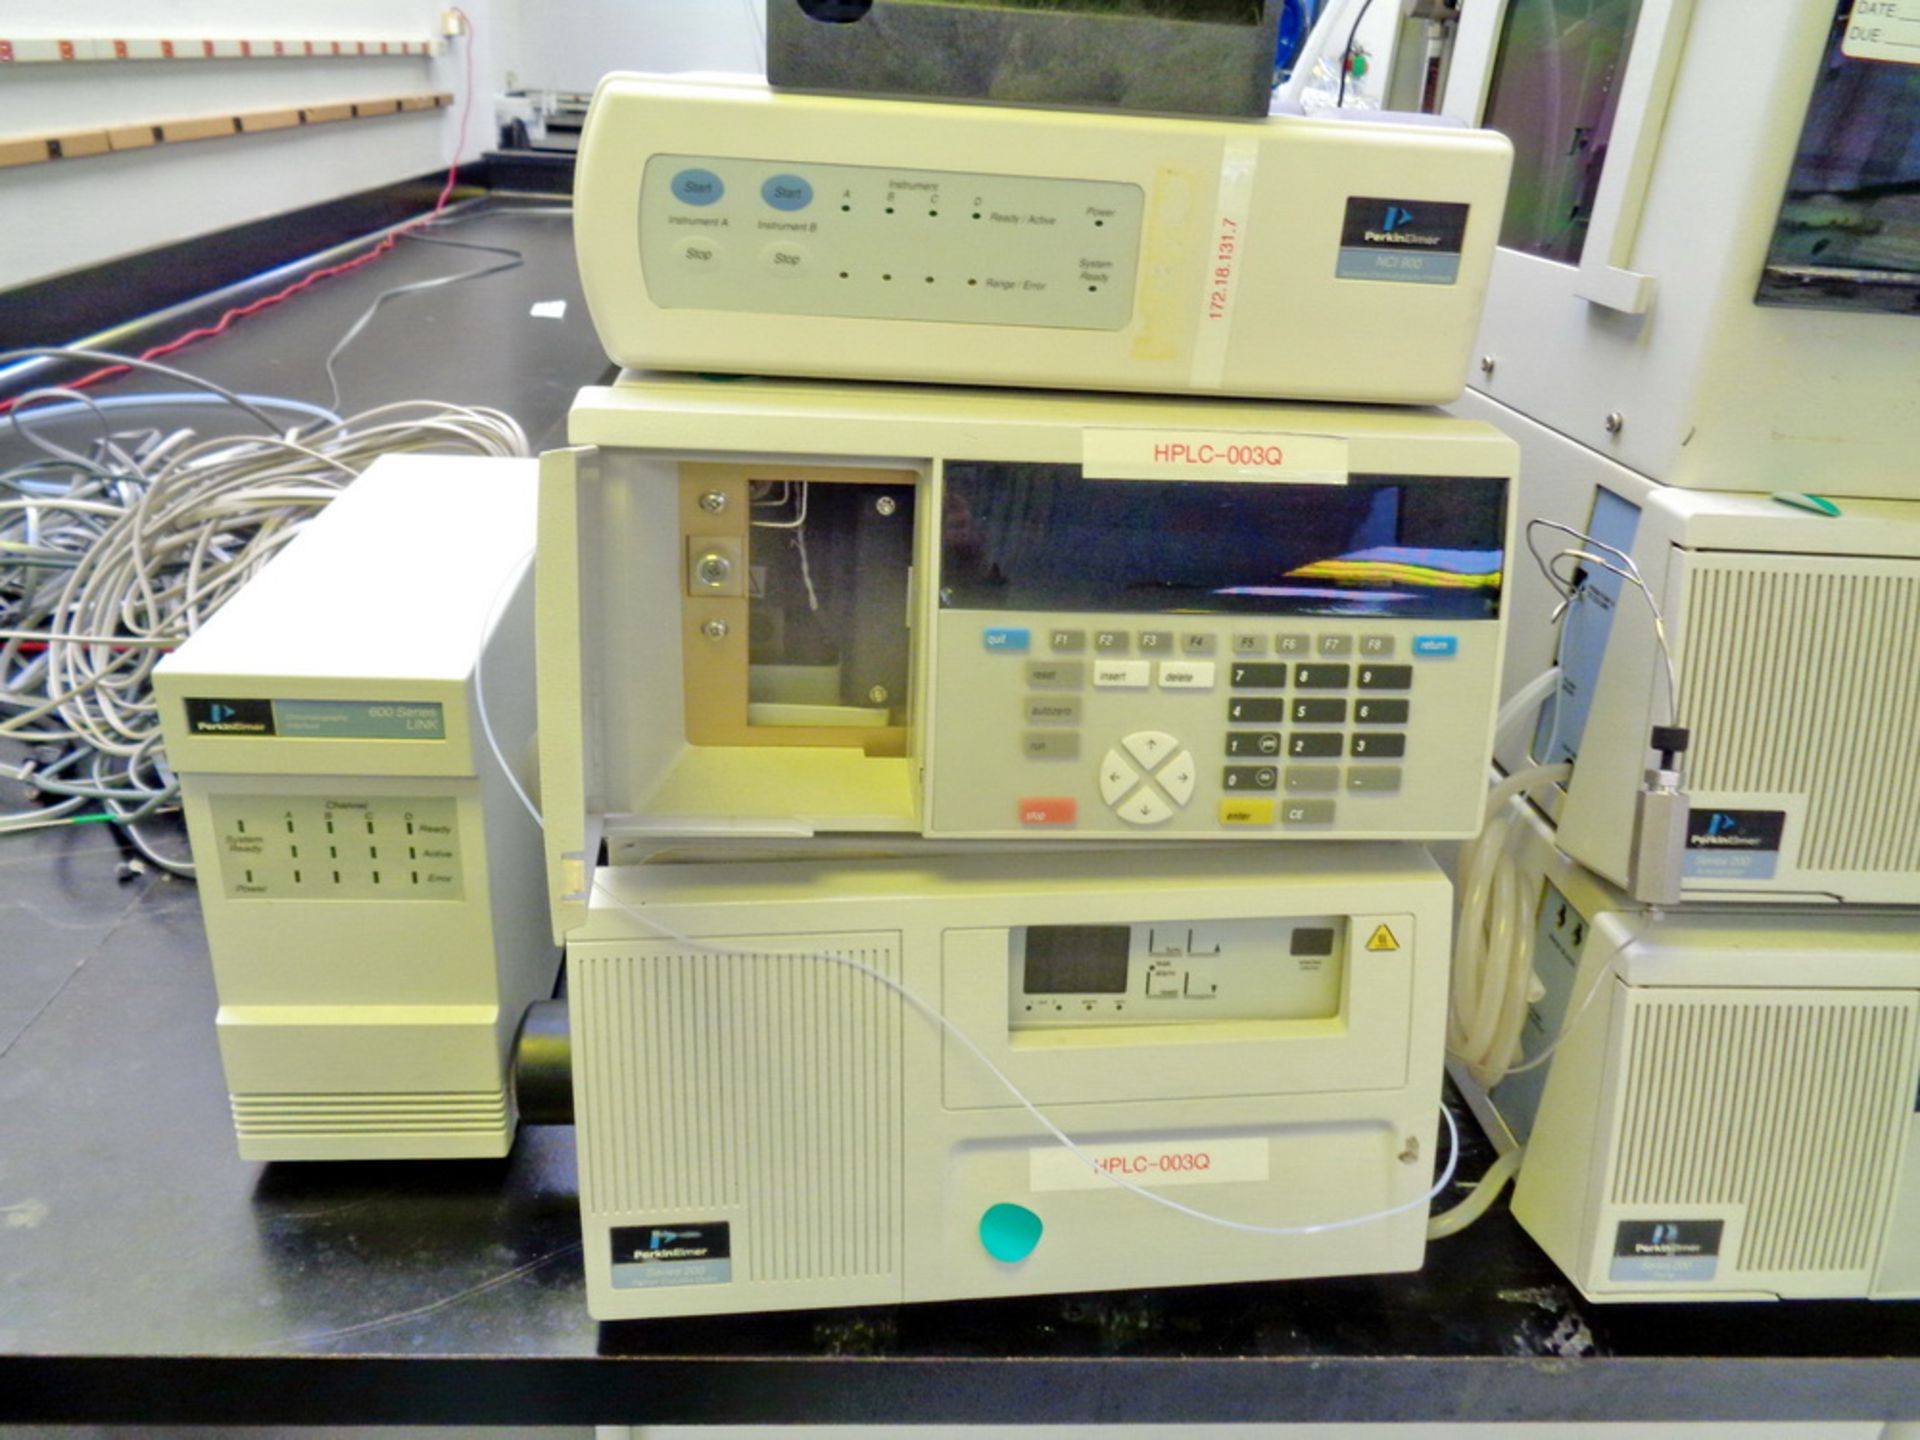 Perkin Elmer series 200 HPLC System with Series 200 Autosampler, Series 200 Pump, UV/VIS Detector - Image 3 of 3